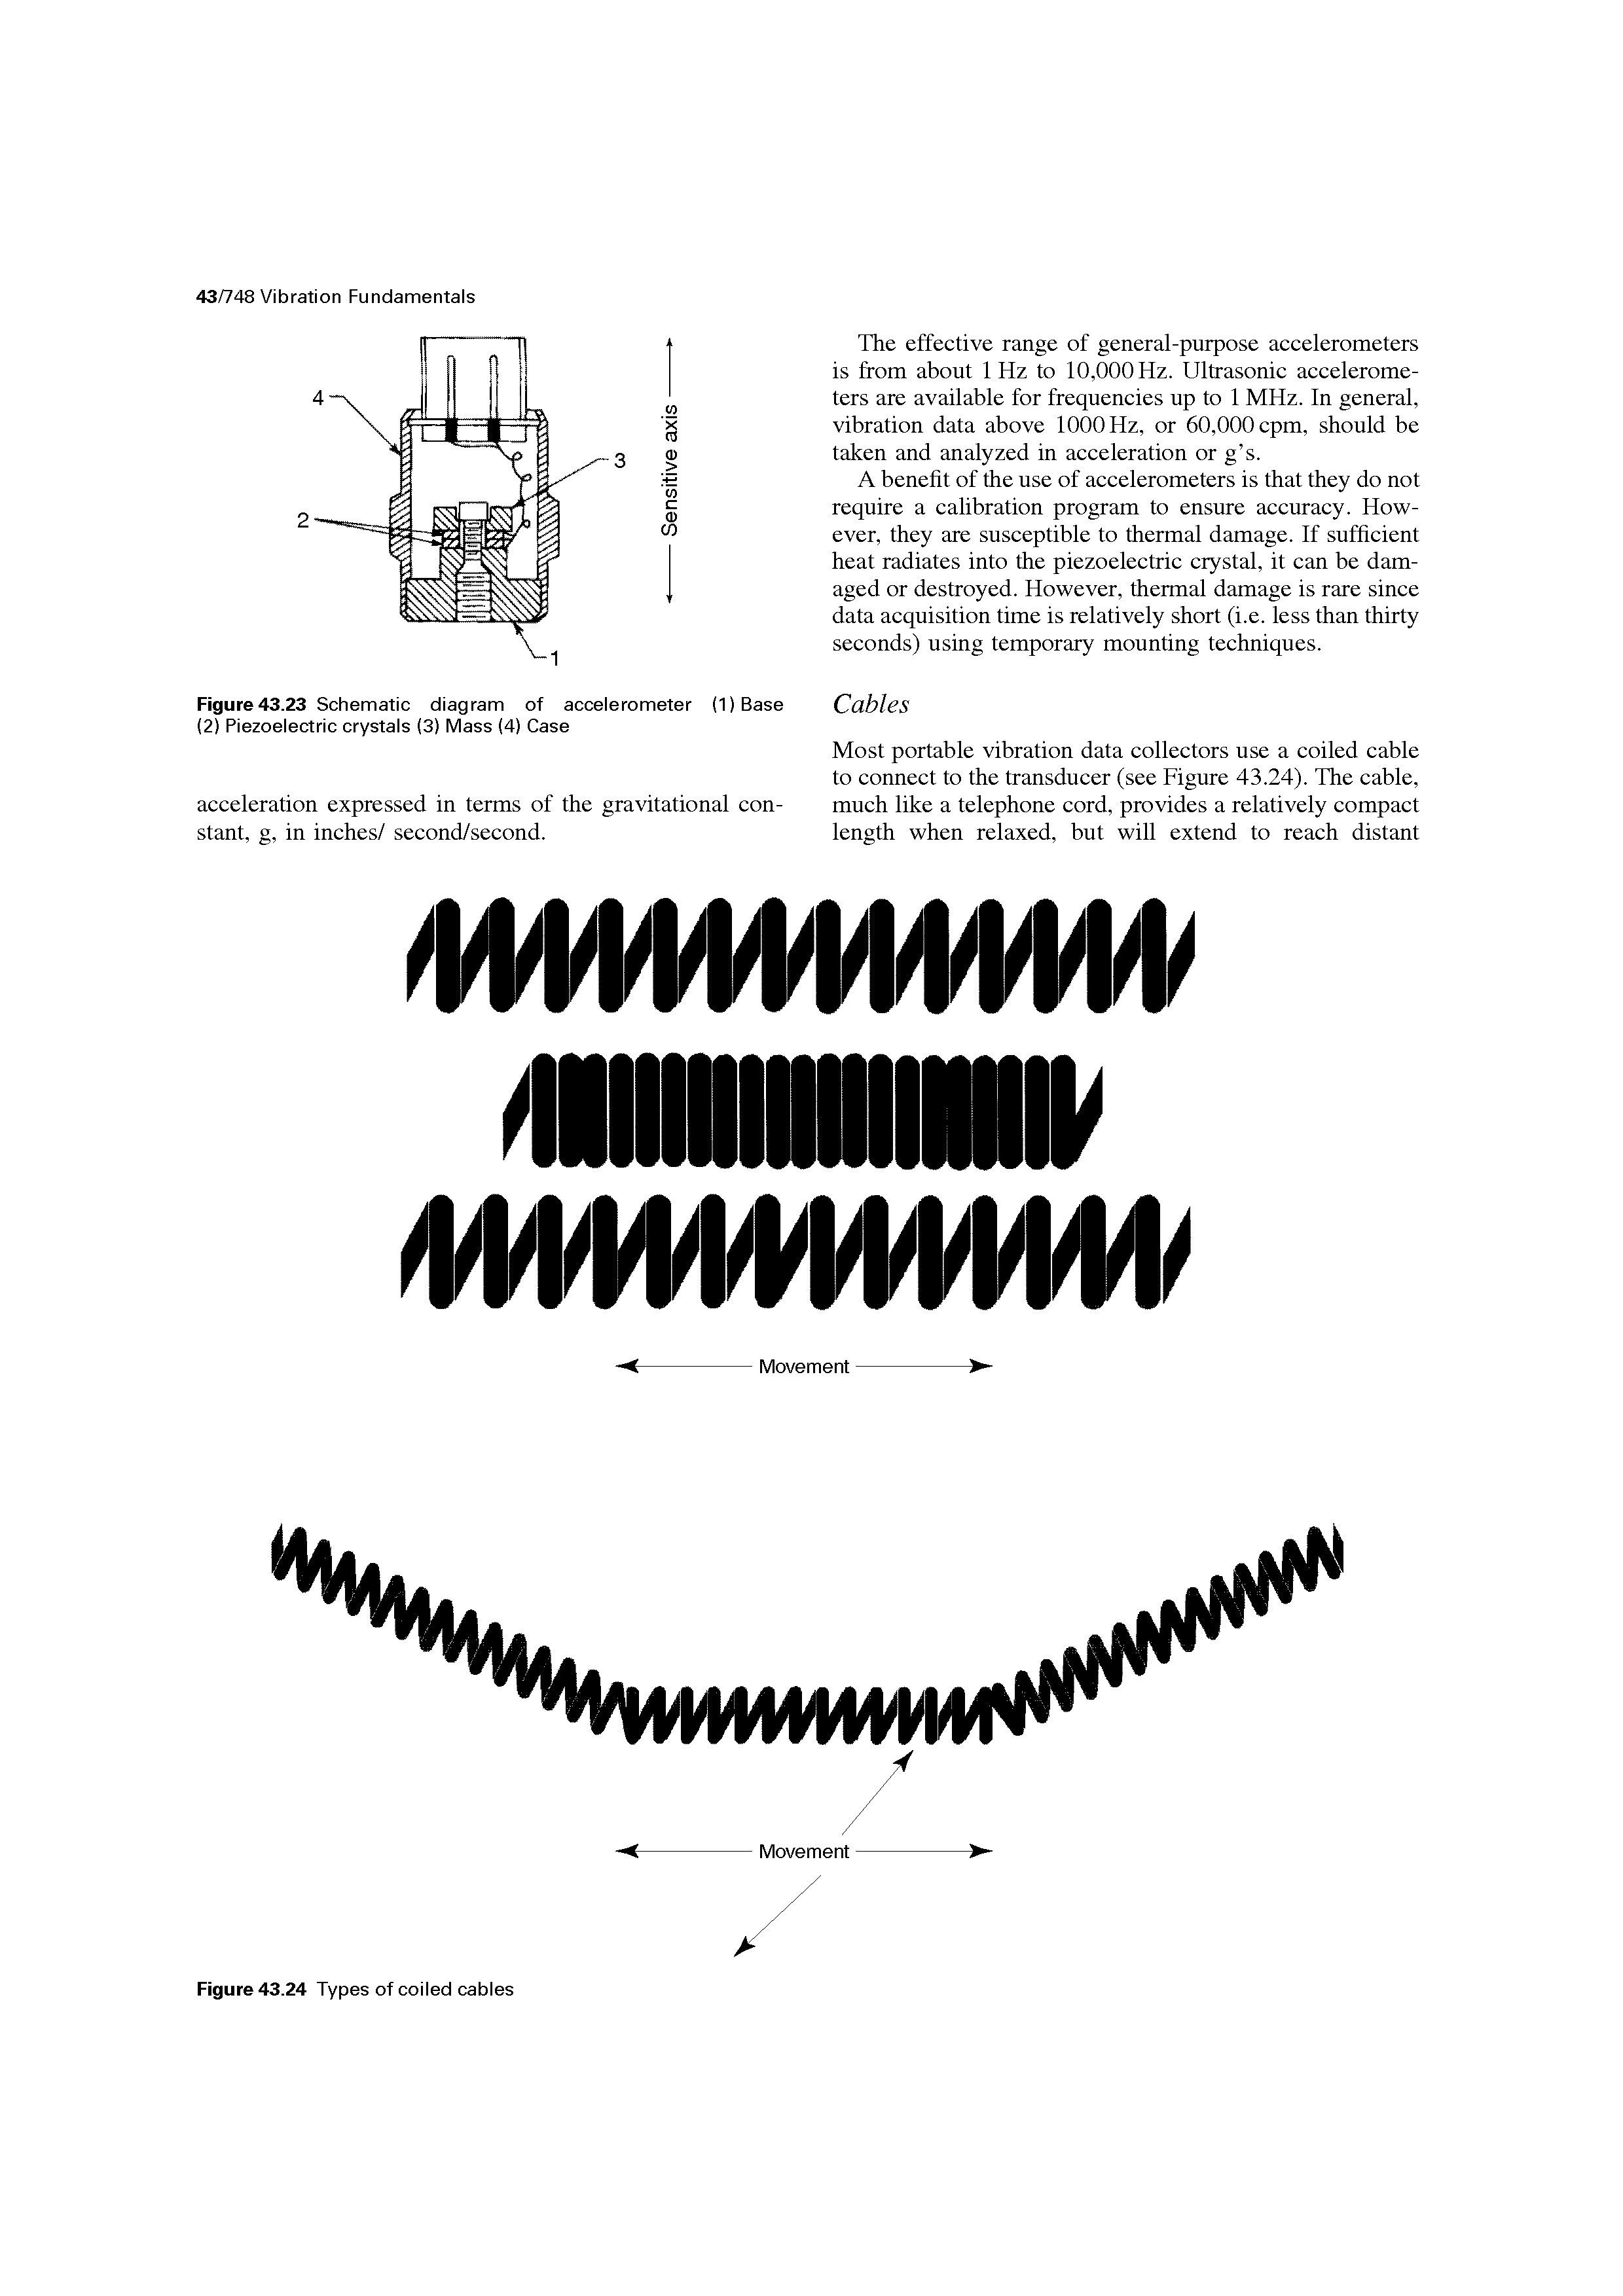 Figure43.23 Schematic diagram of accelerometer (l)Base (2) Piezoelectric crystals (3) Mass (4) Case...